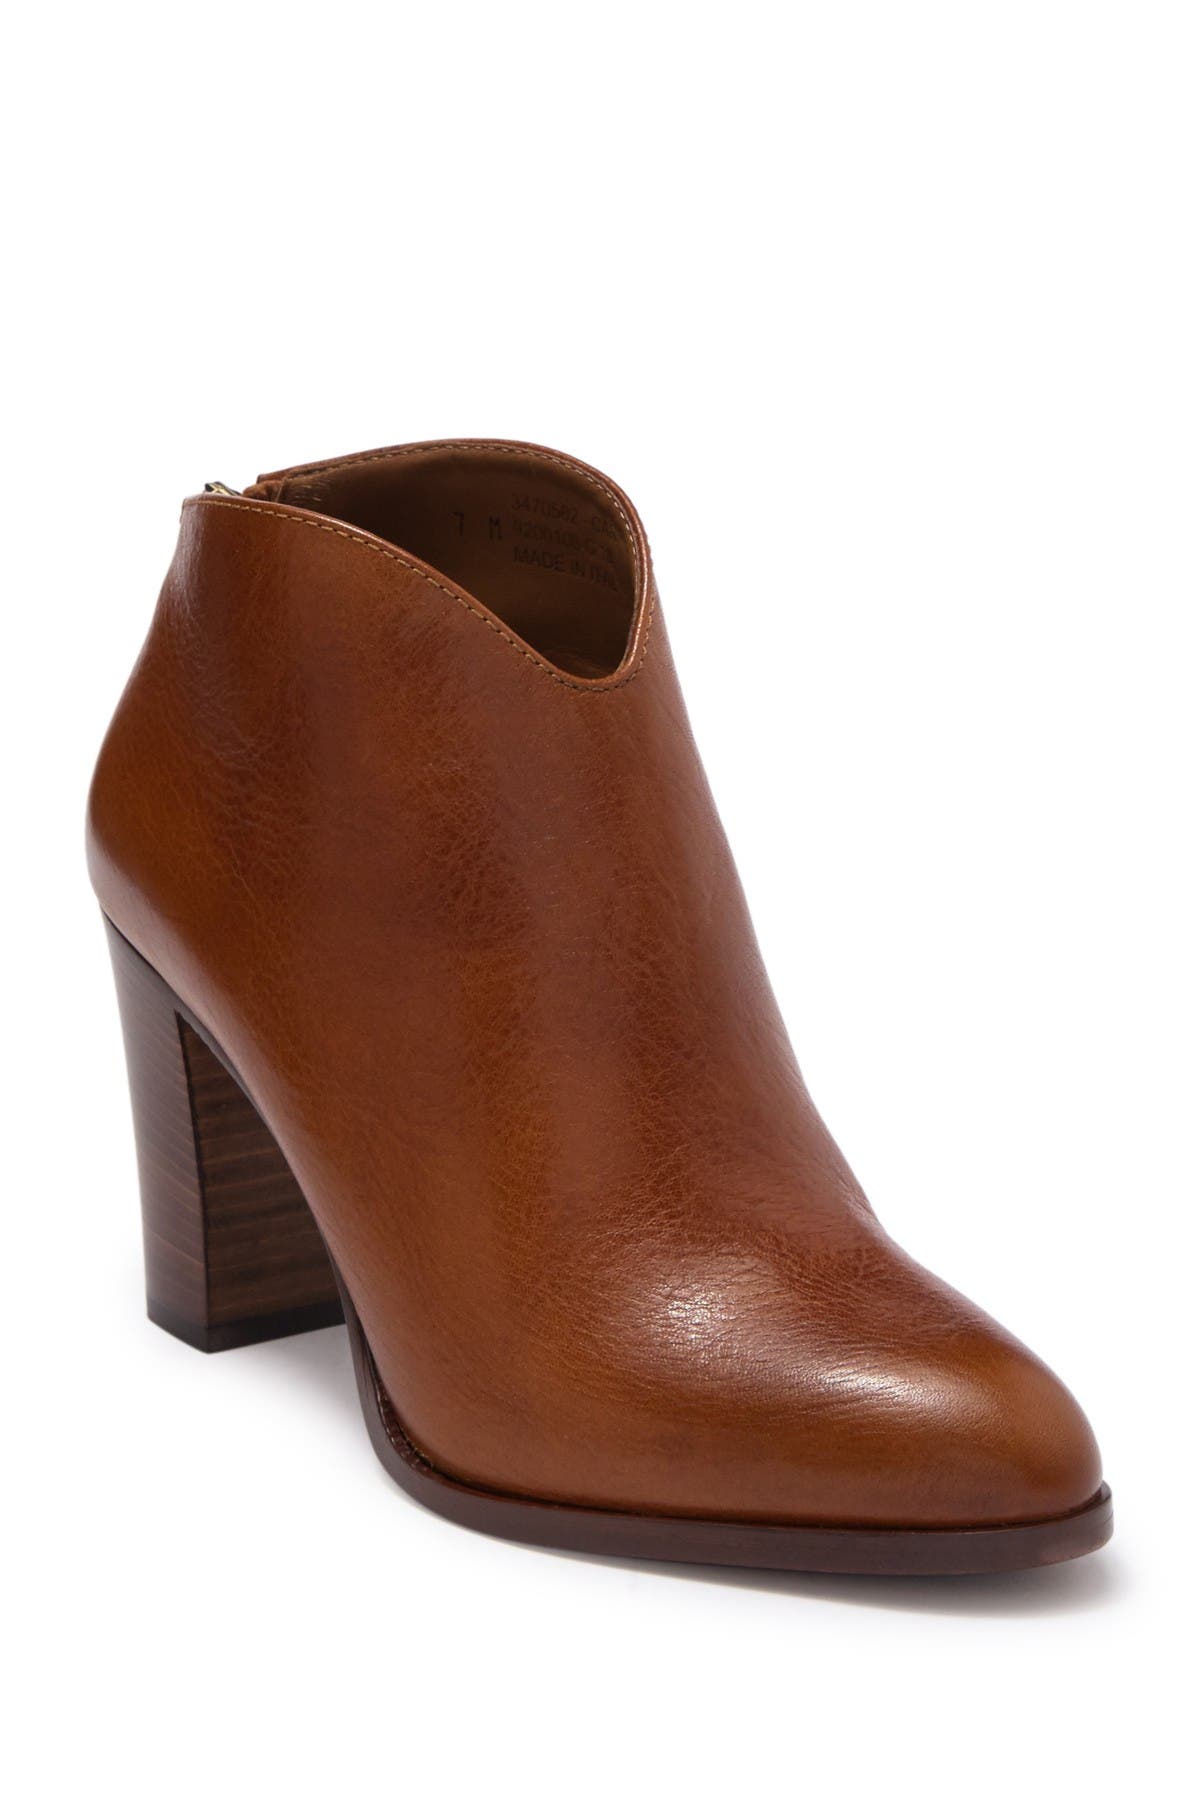 frye block heel leather booties